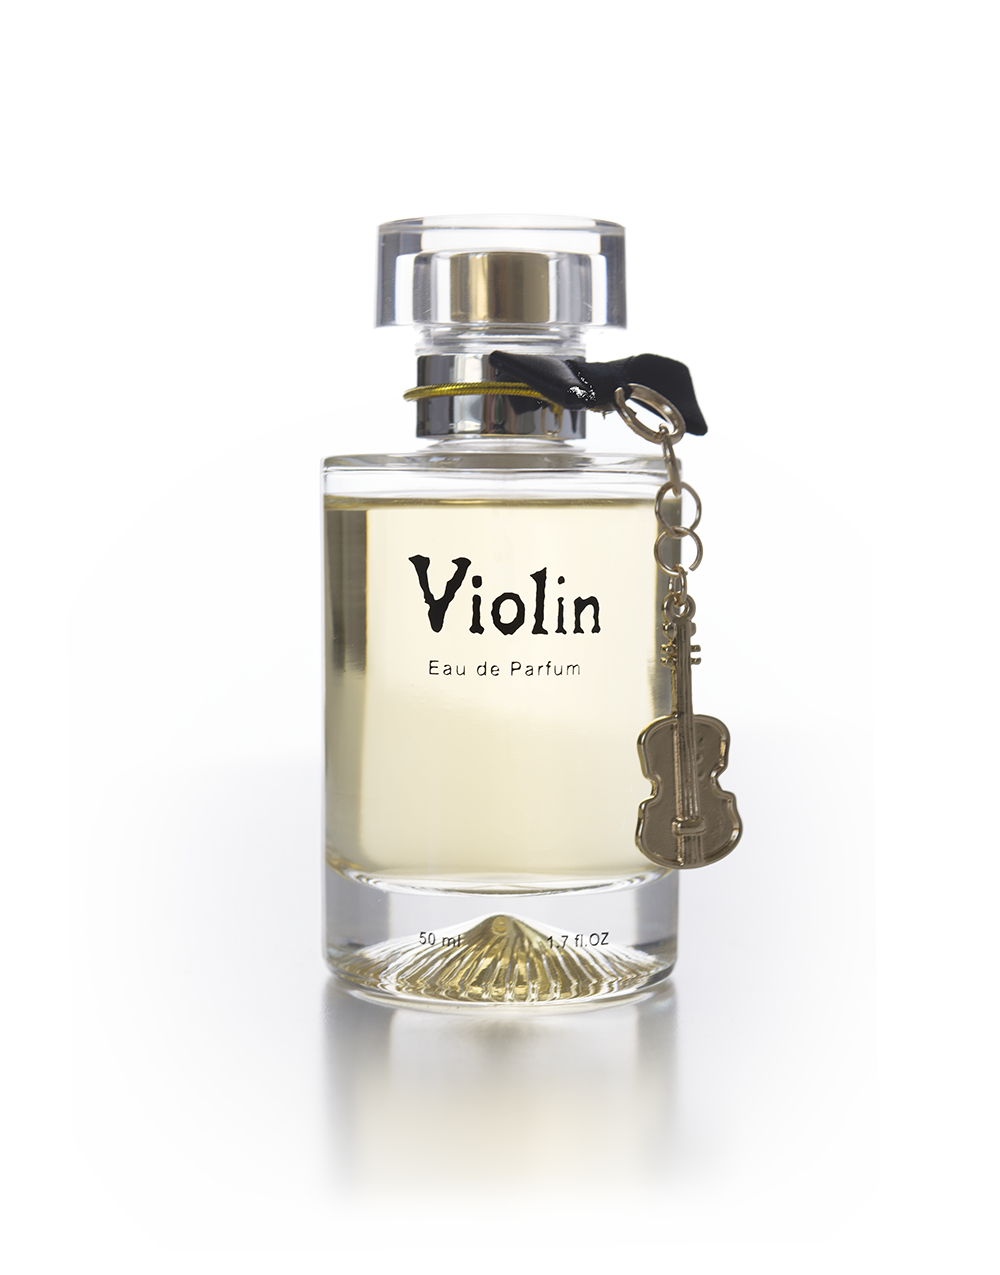 Violin - Eau de Parfum